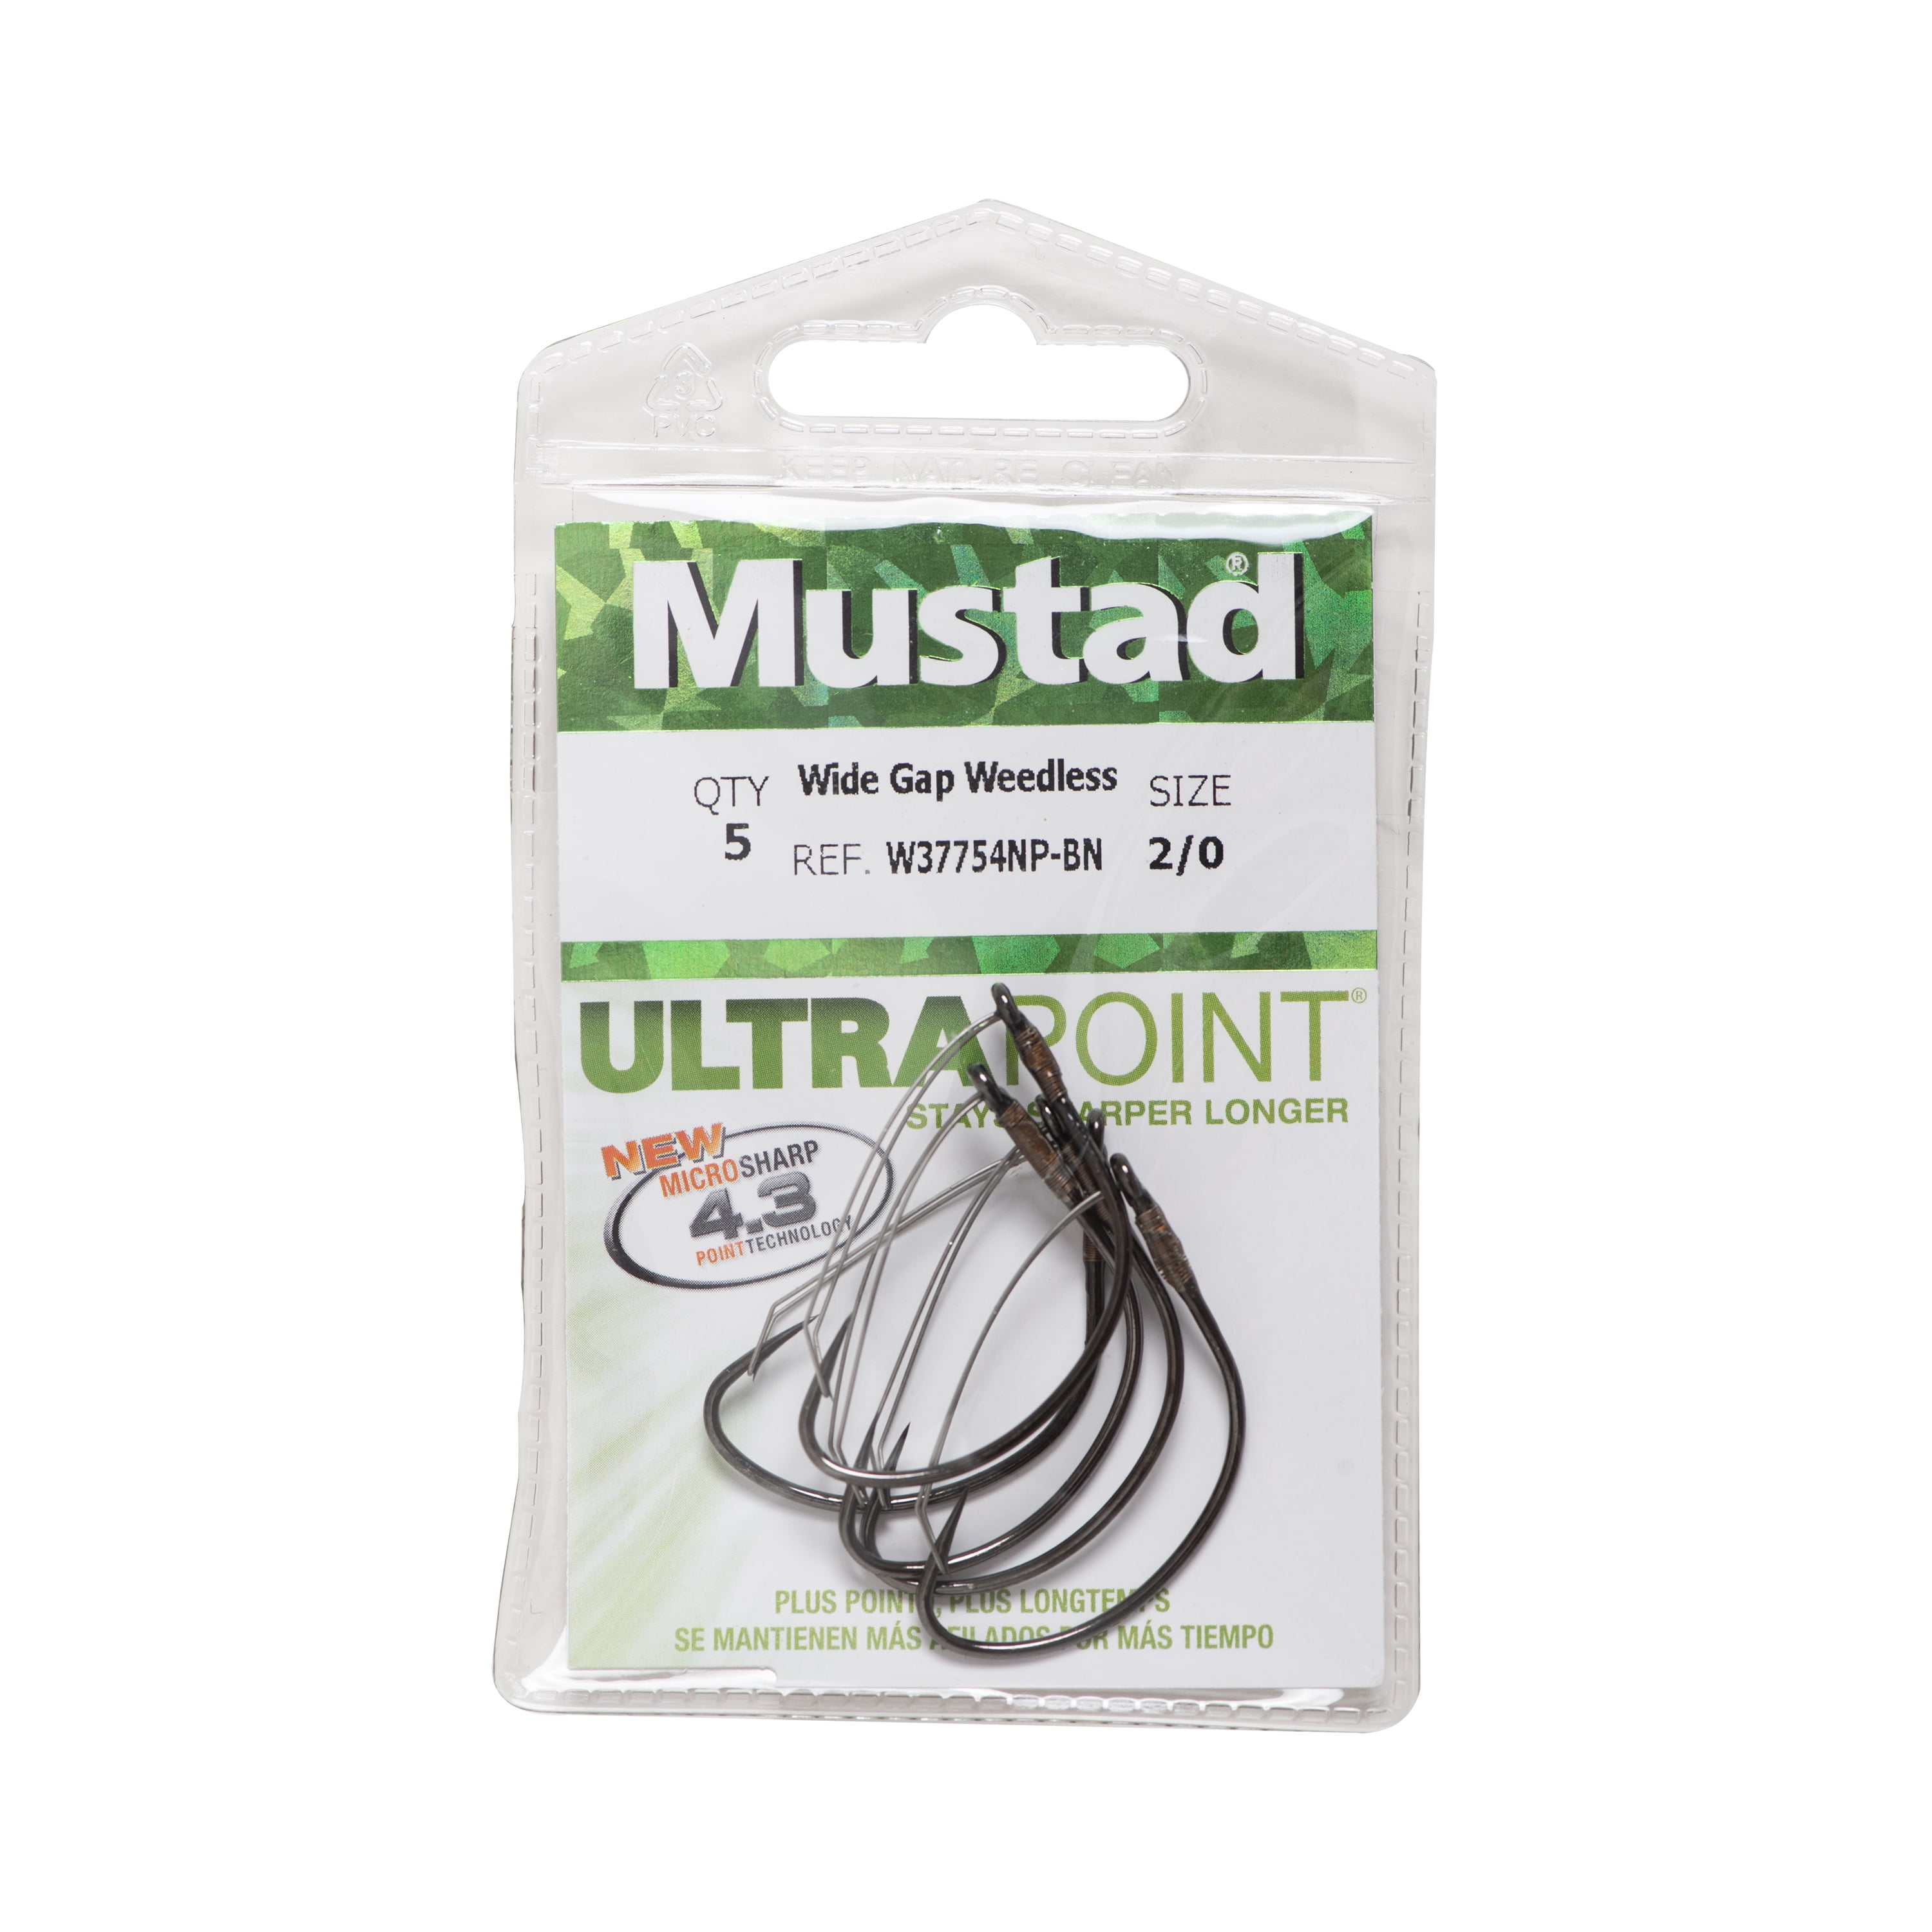 Mustad Ultra Point Weedless Wide Gap Hook (Black Nickel) - Size: 2